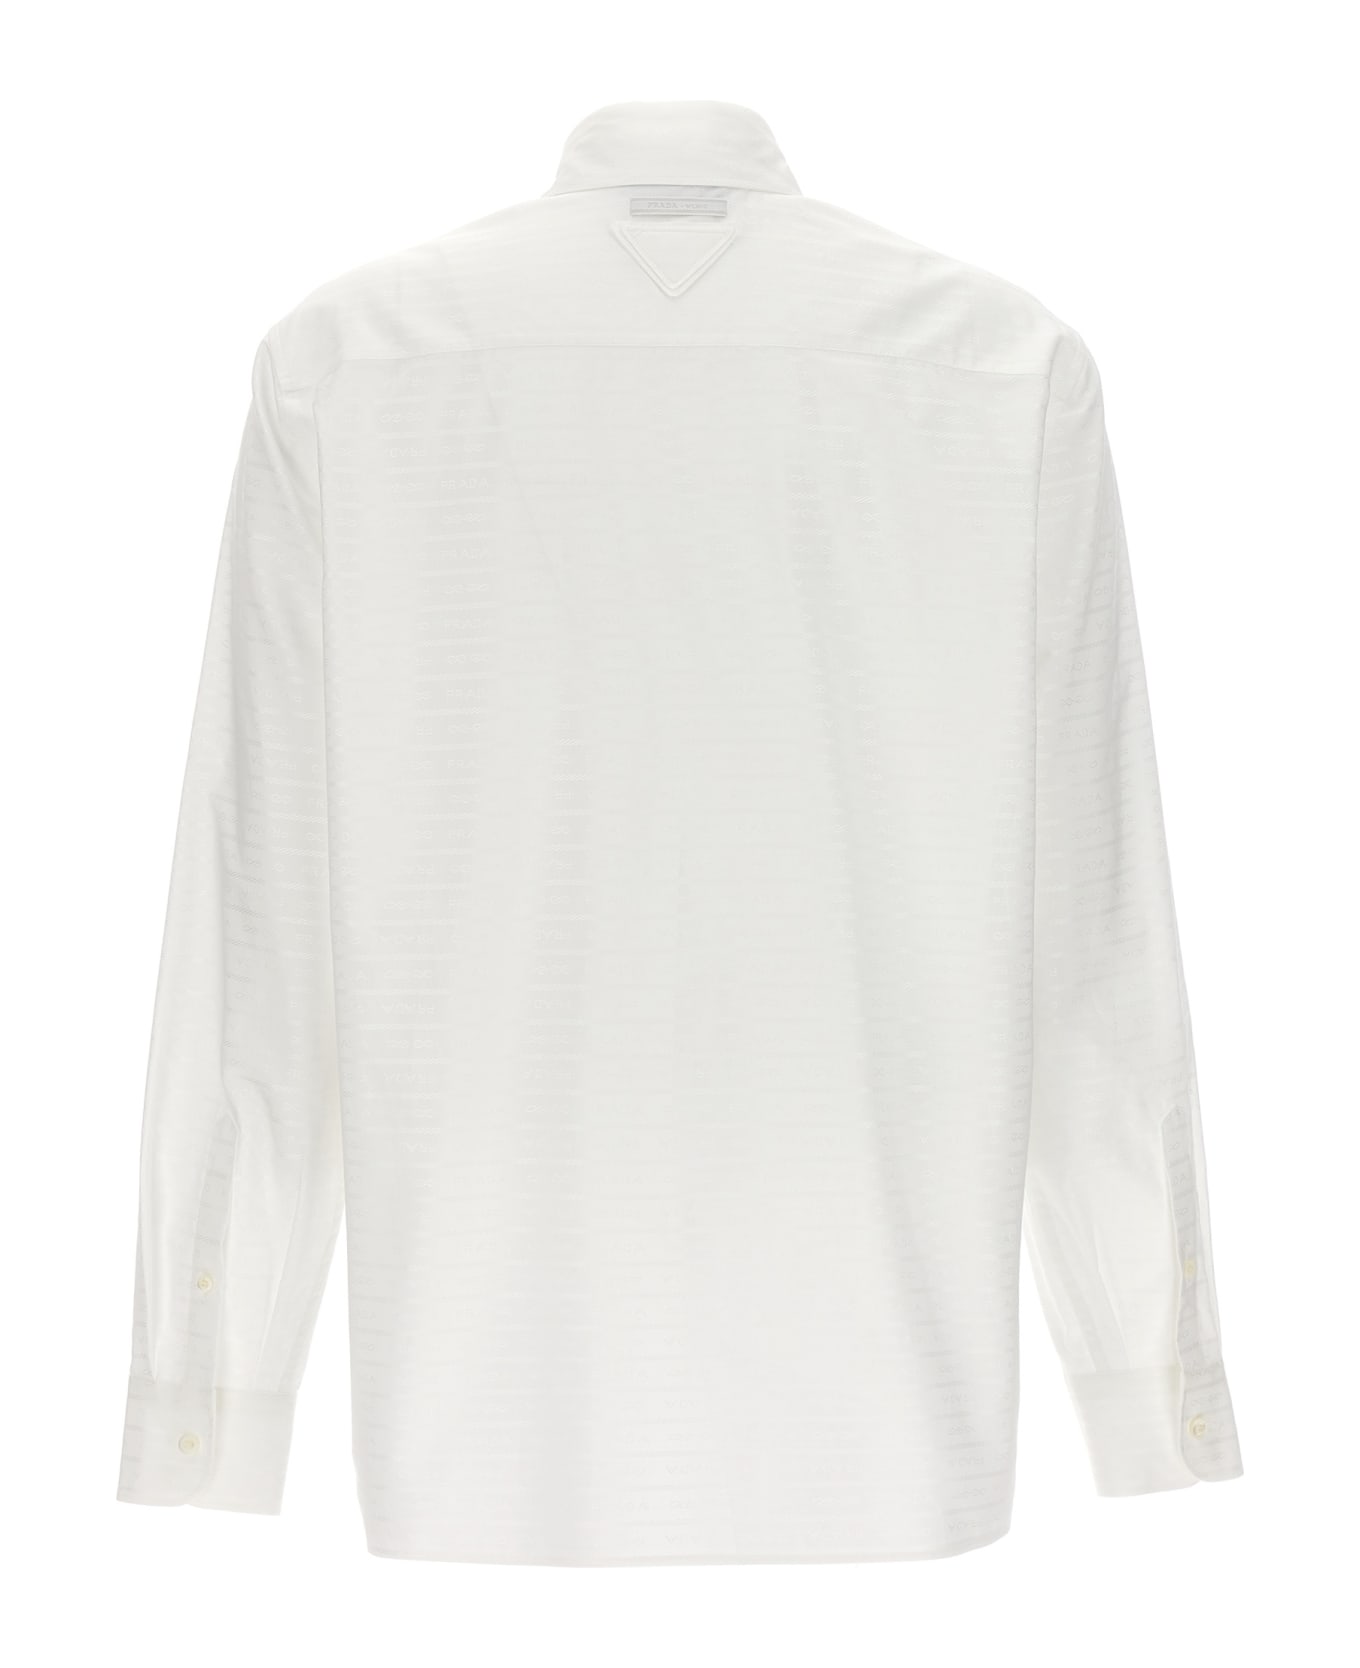 Prada Jacquard Logo Shirt - Bianco シャツ